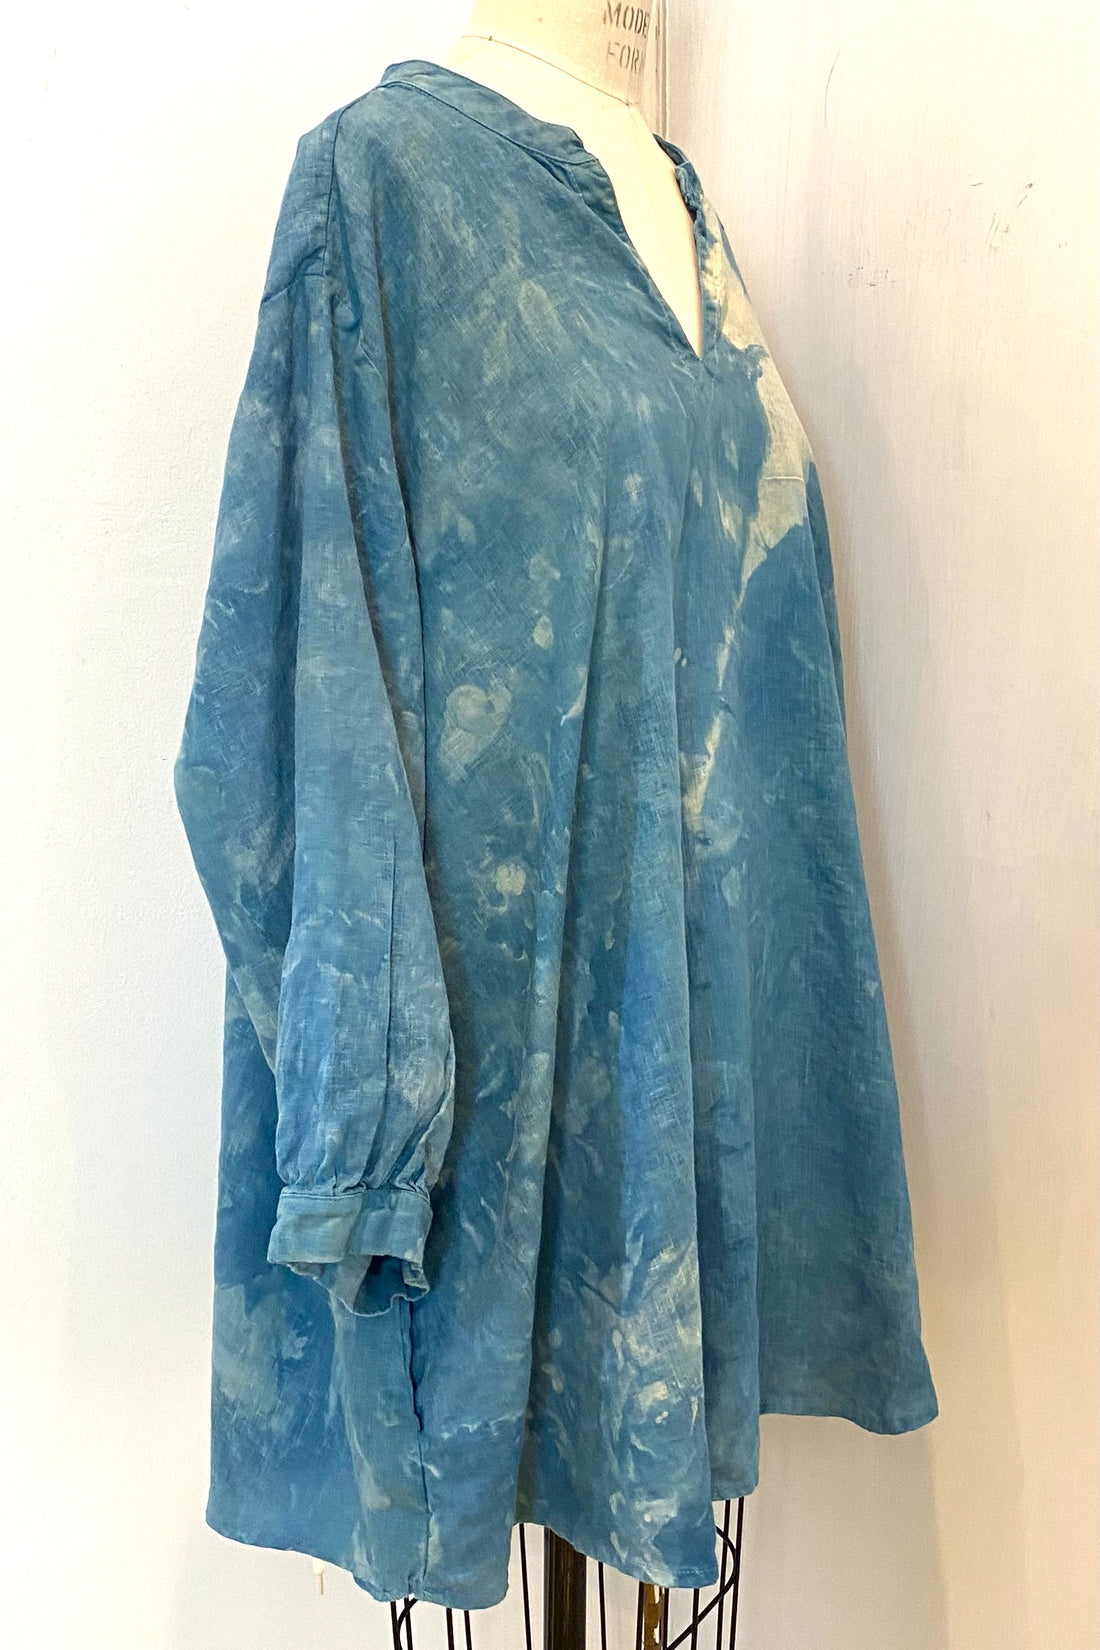 Botanically Dyed Linen Tunic in Blue Size 3